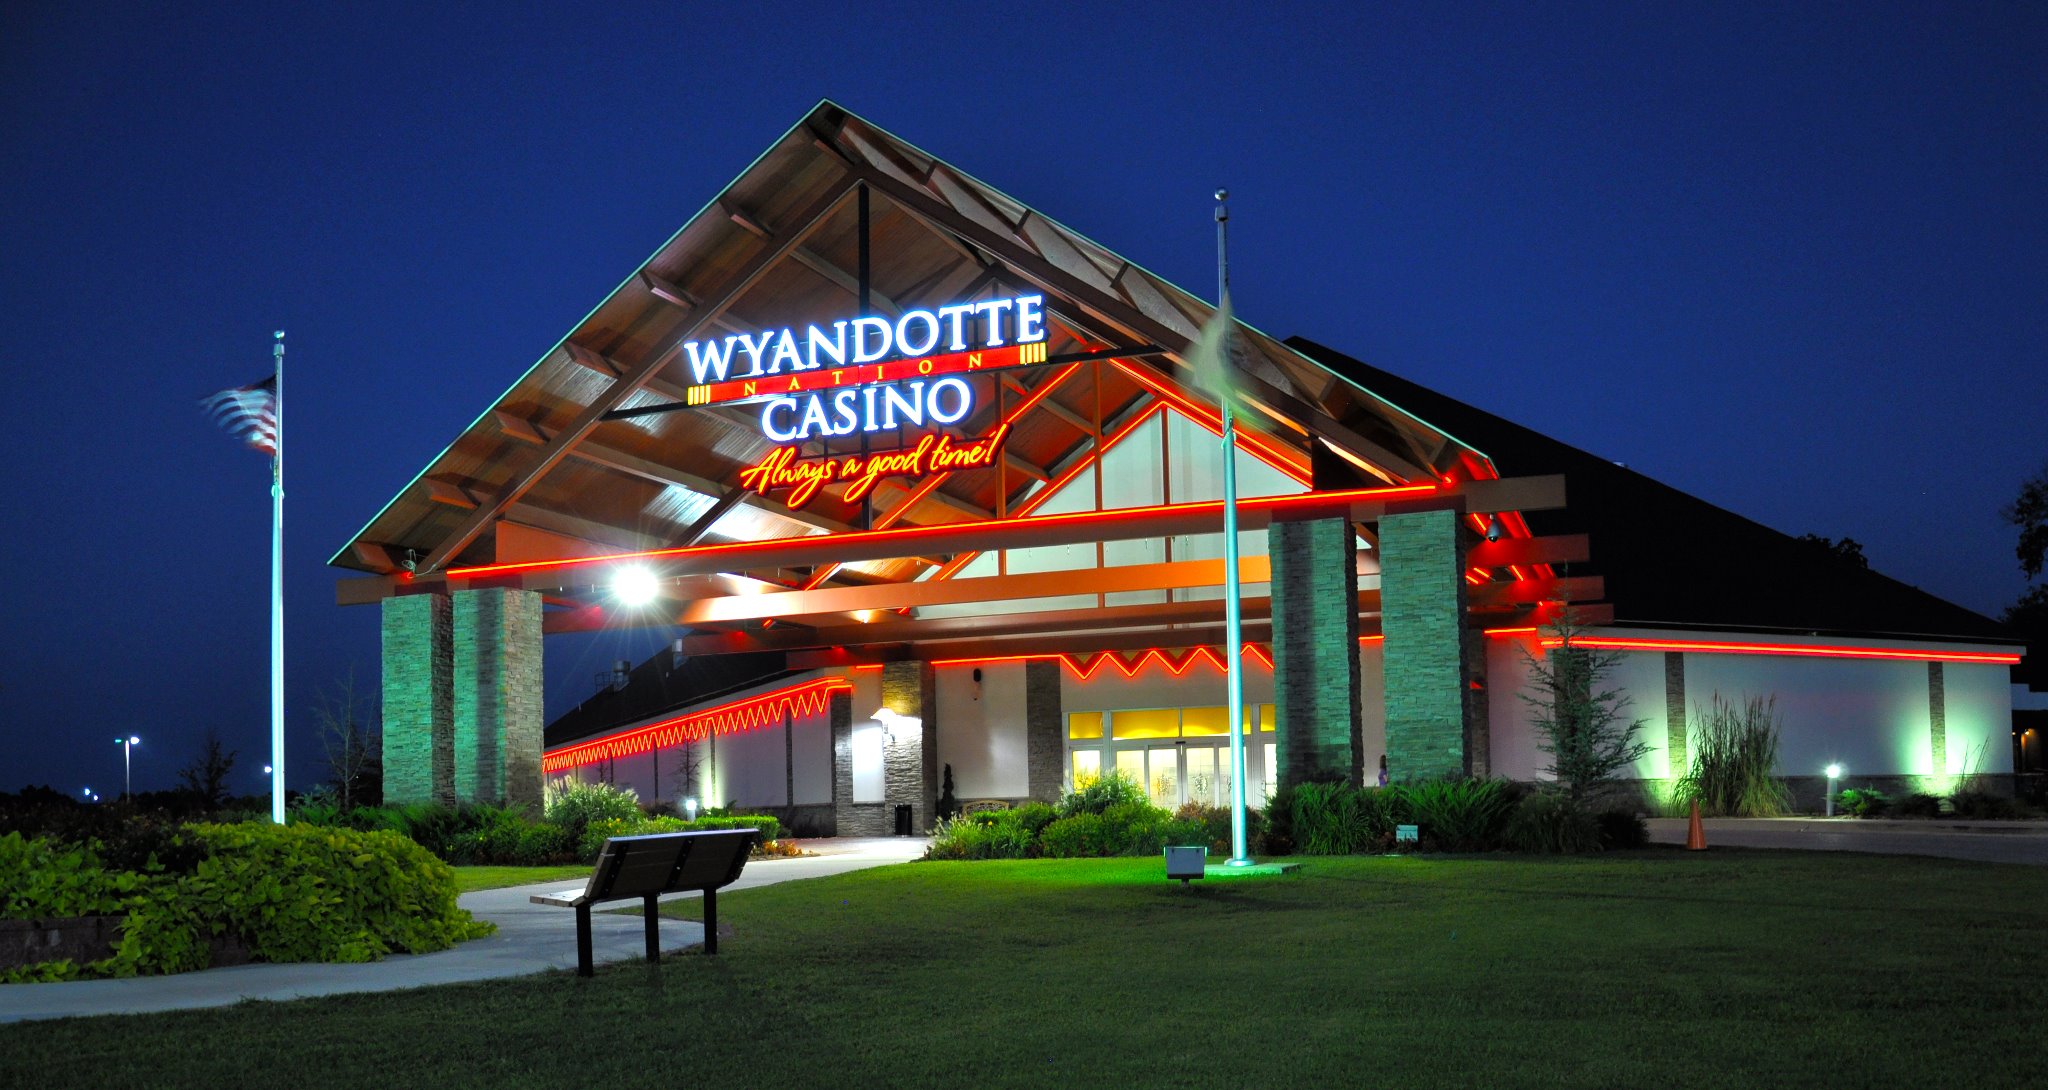 Wyandotte ok casino hotel